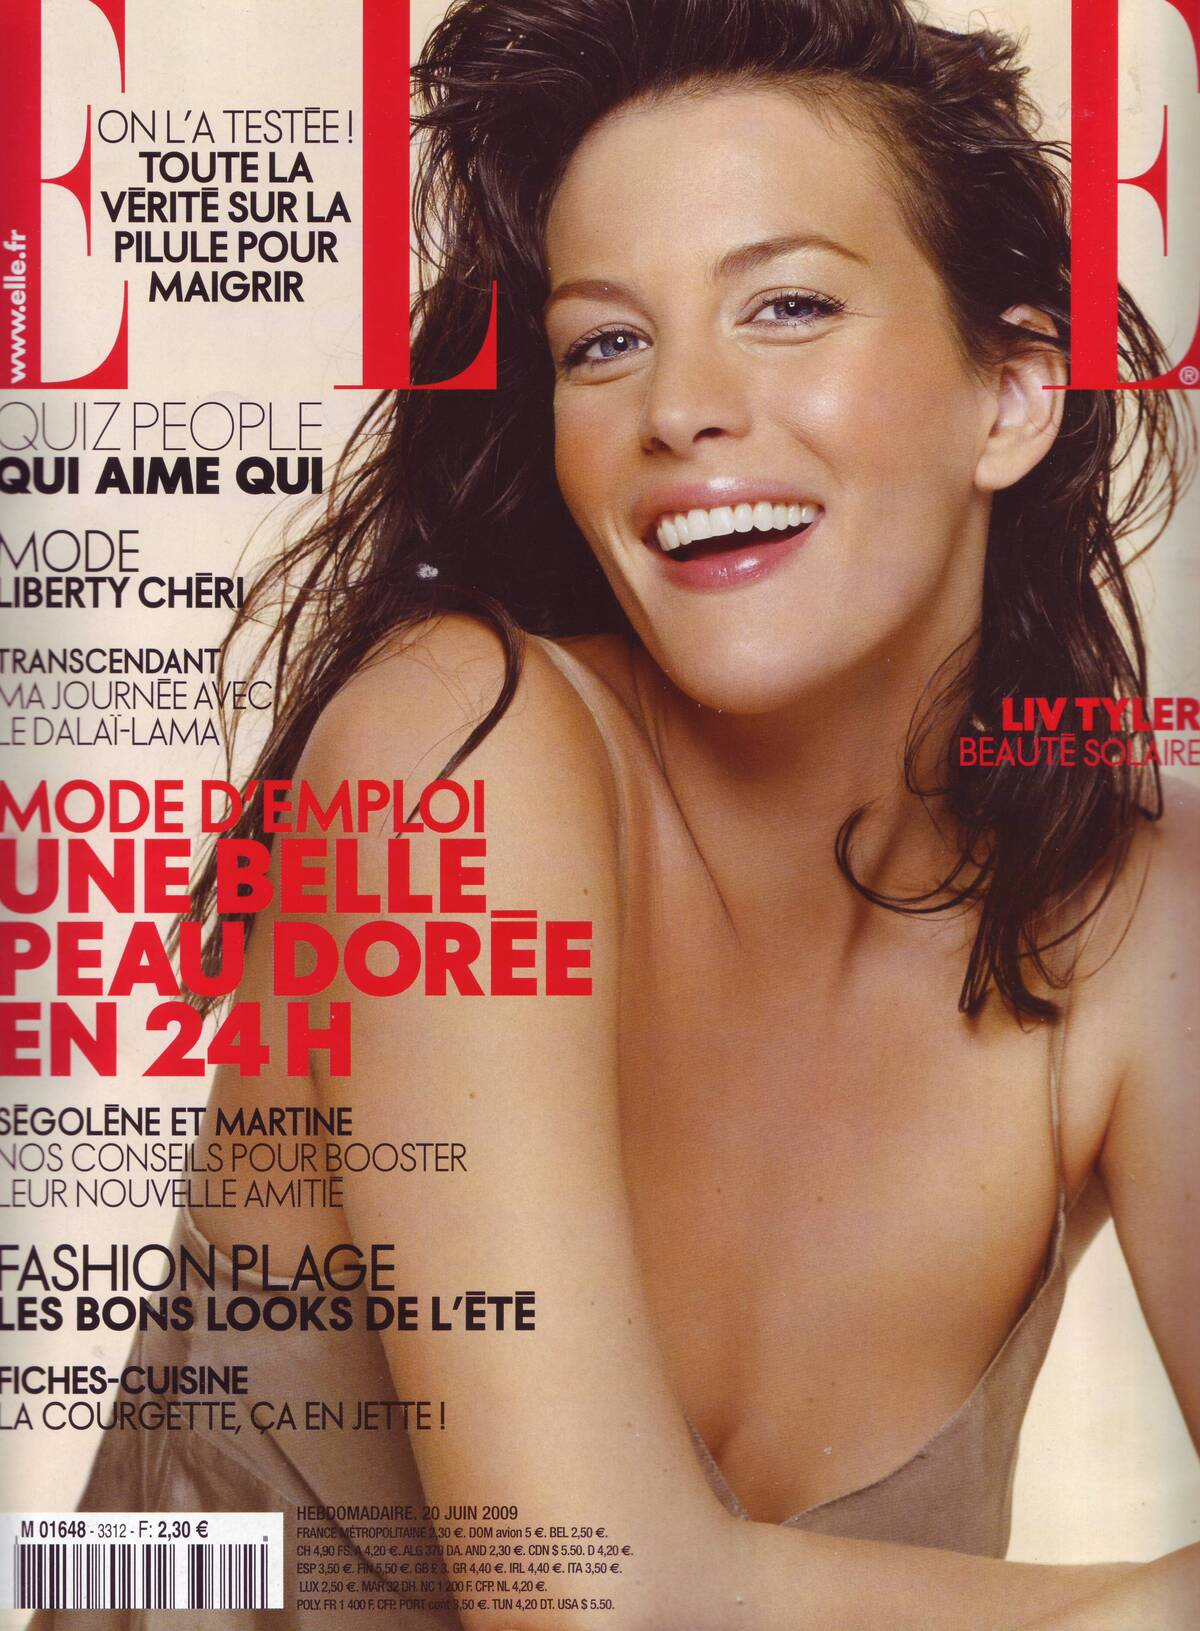 Лив Тайлер в журнале Elle. Франция. Июнь 2009